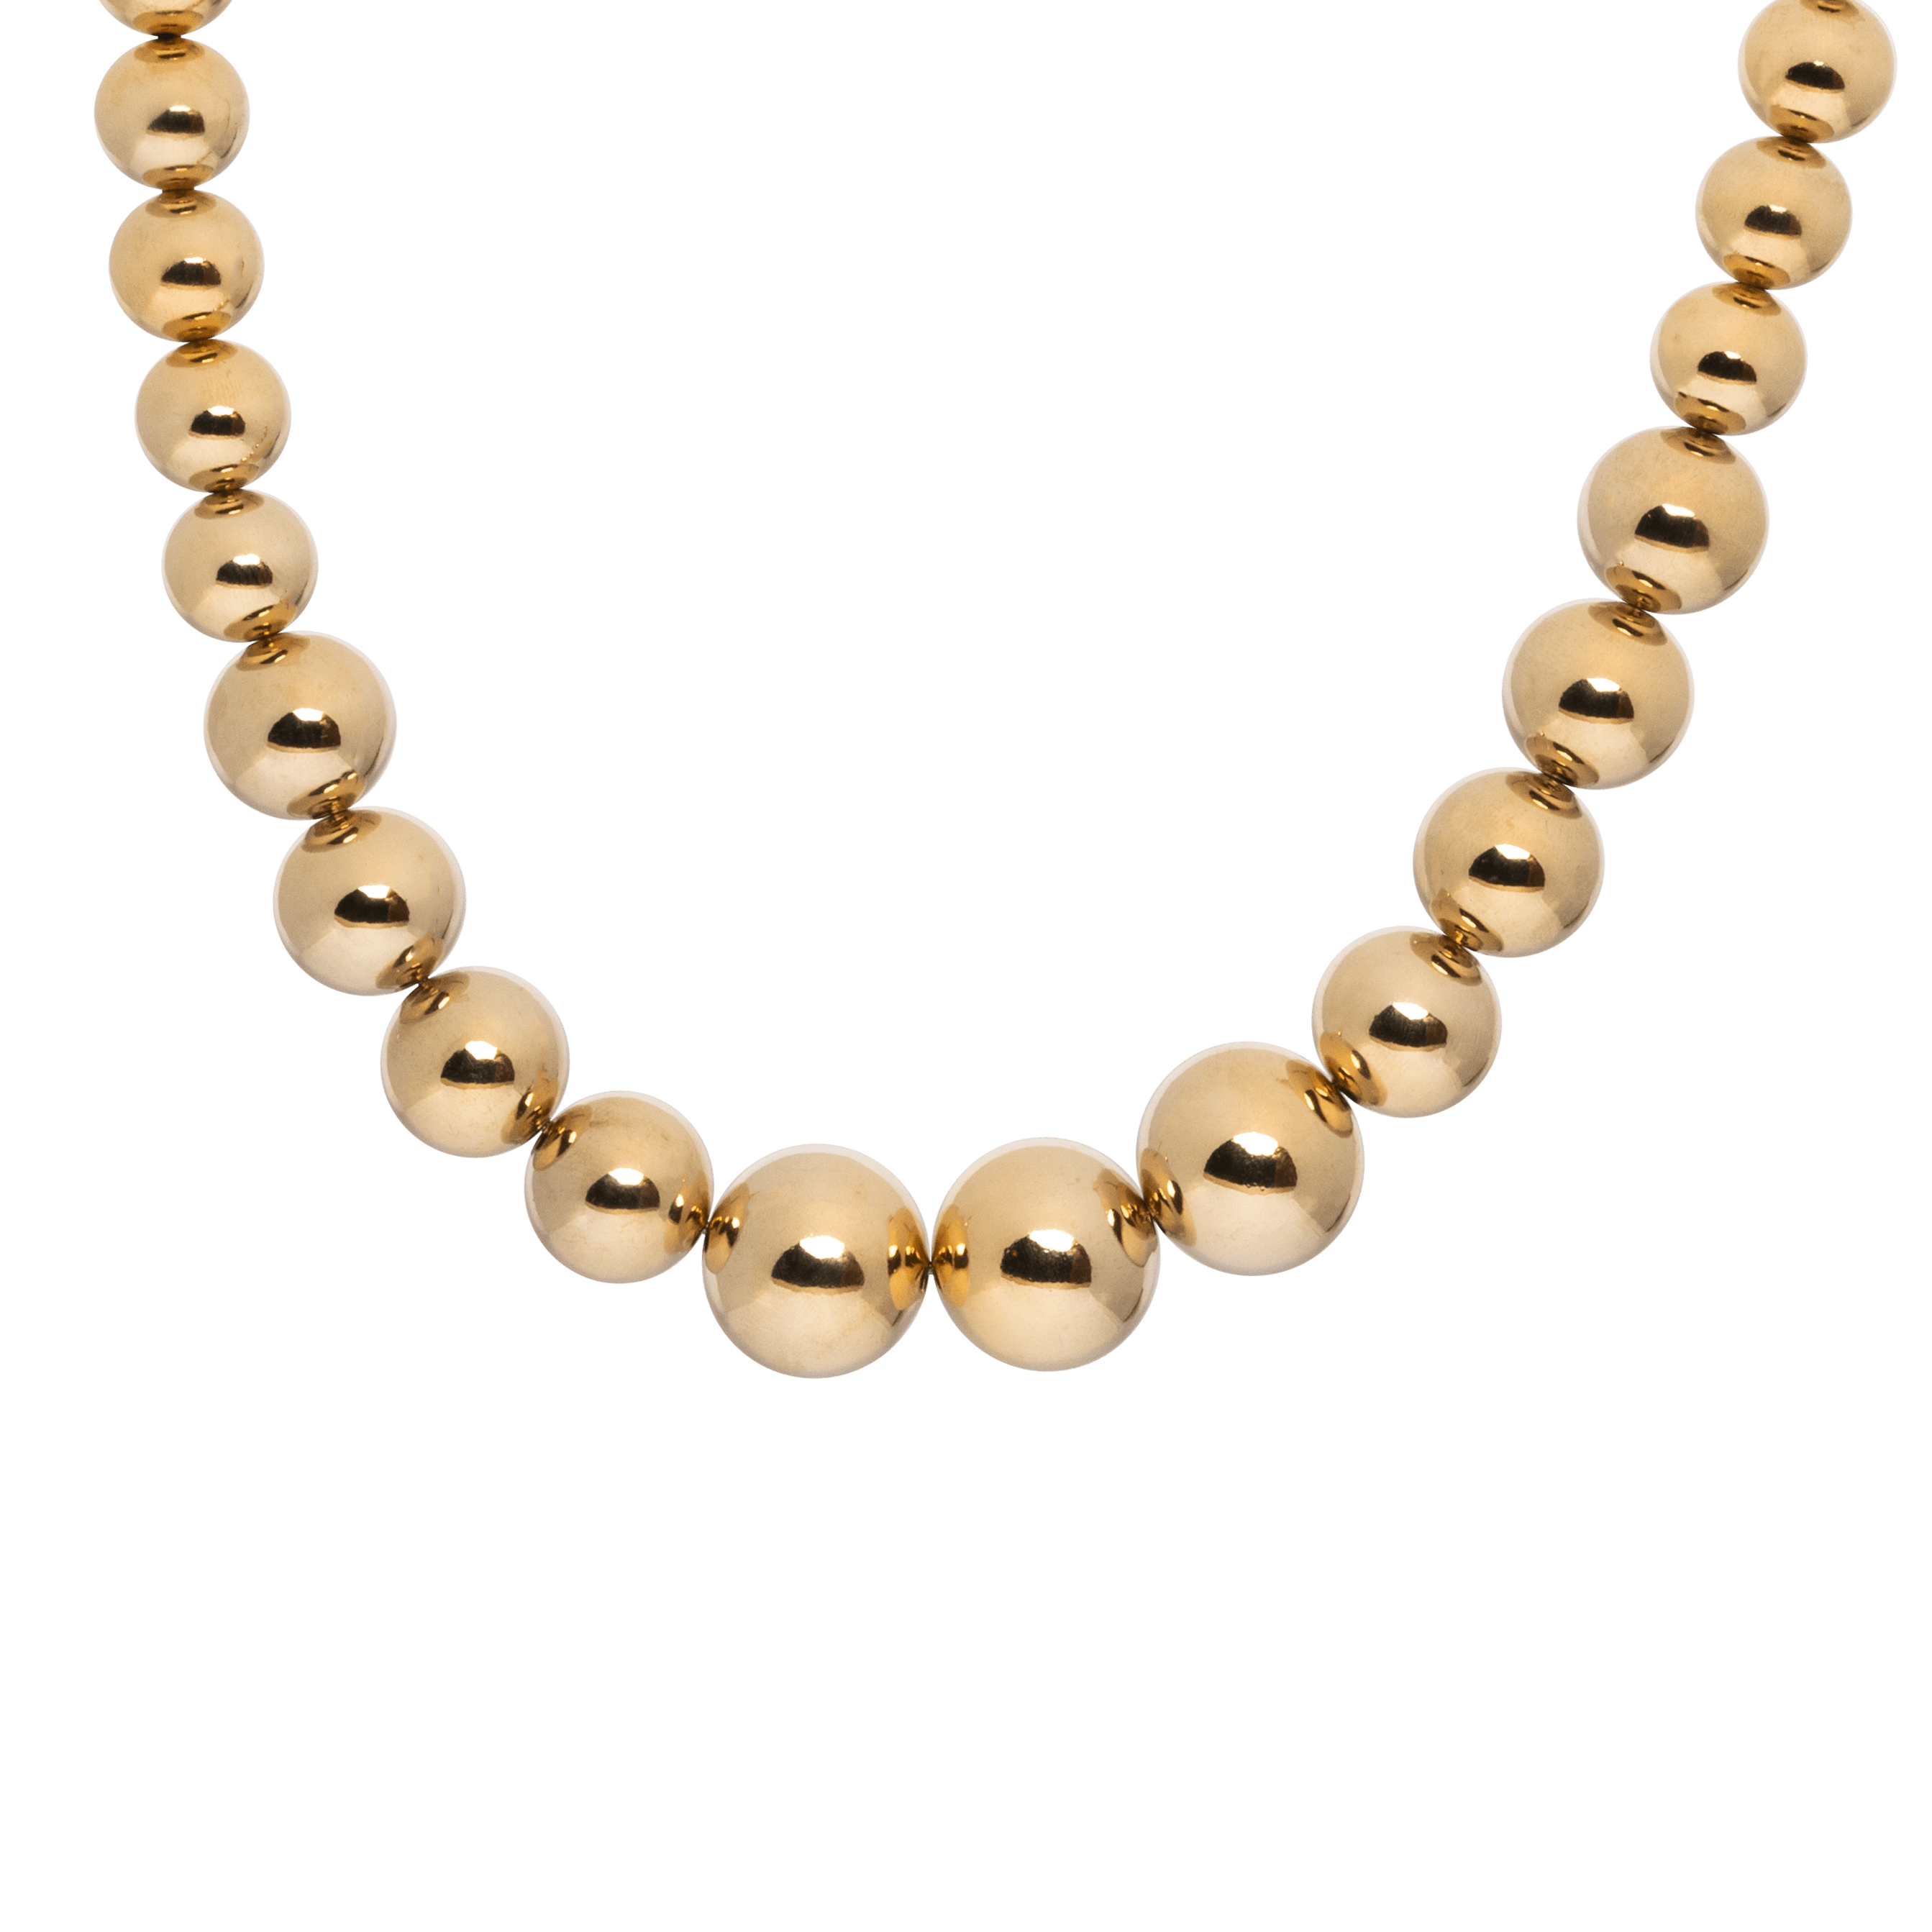 Meomari Terabust Dog Necklace Collar - Meomari